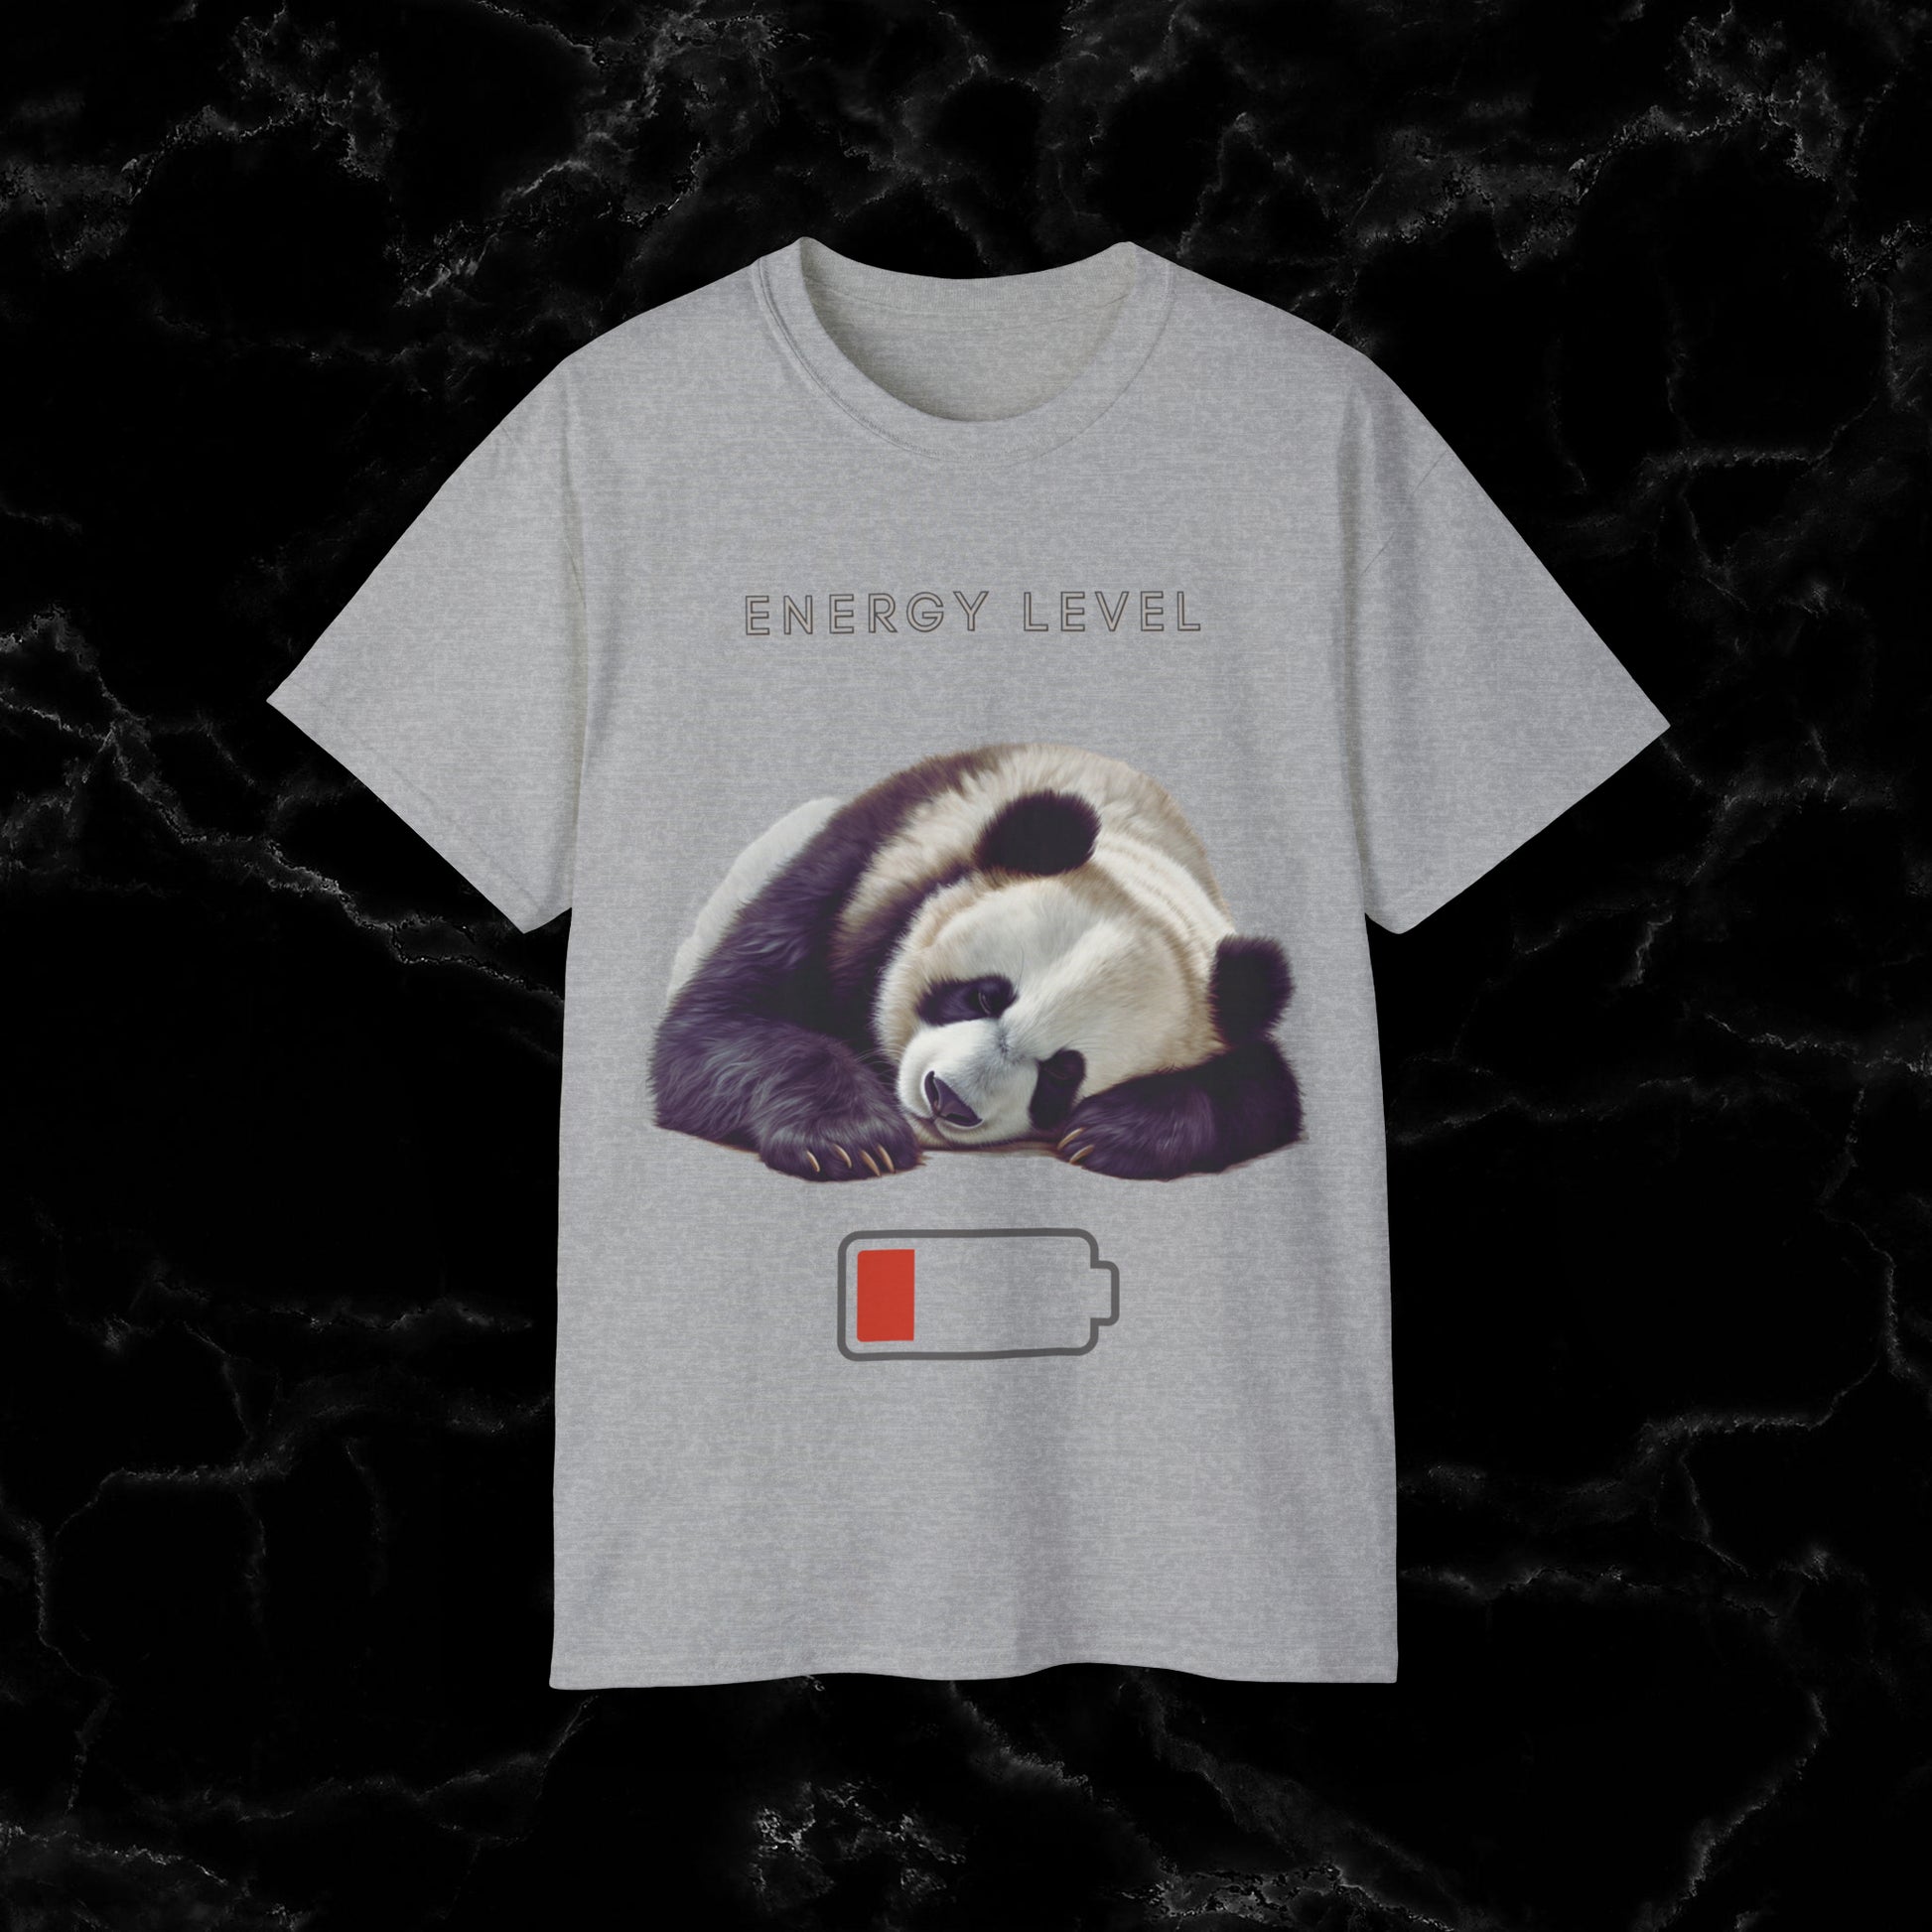 Nap Time Panda Unisex Funny Tee - Hilarious Panda Nap Design - Energy Level T-Shirt Sport Grey S 